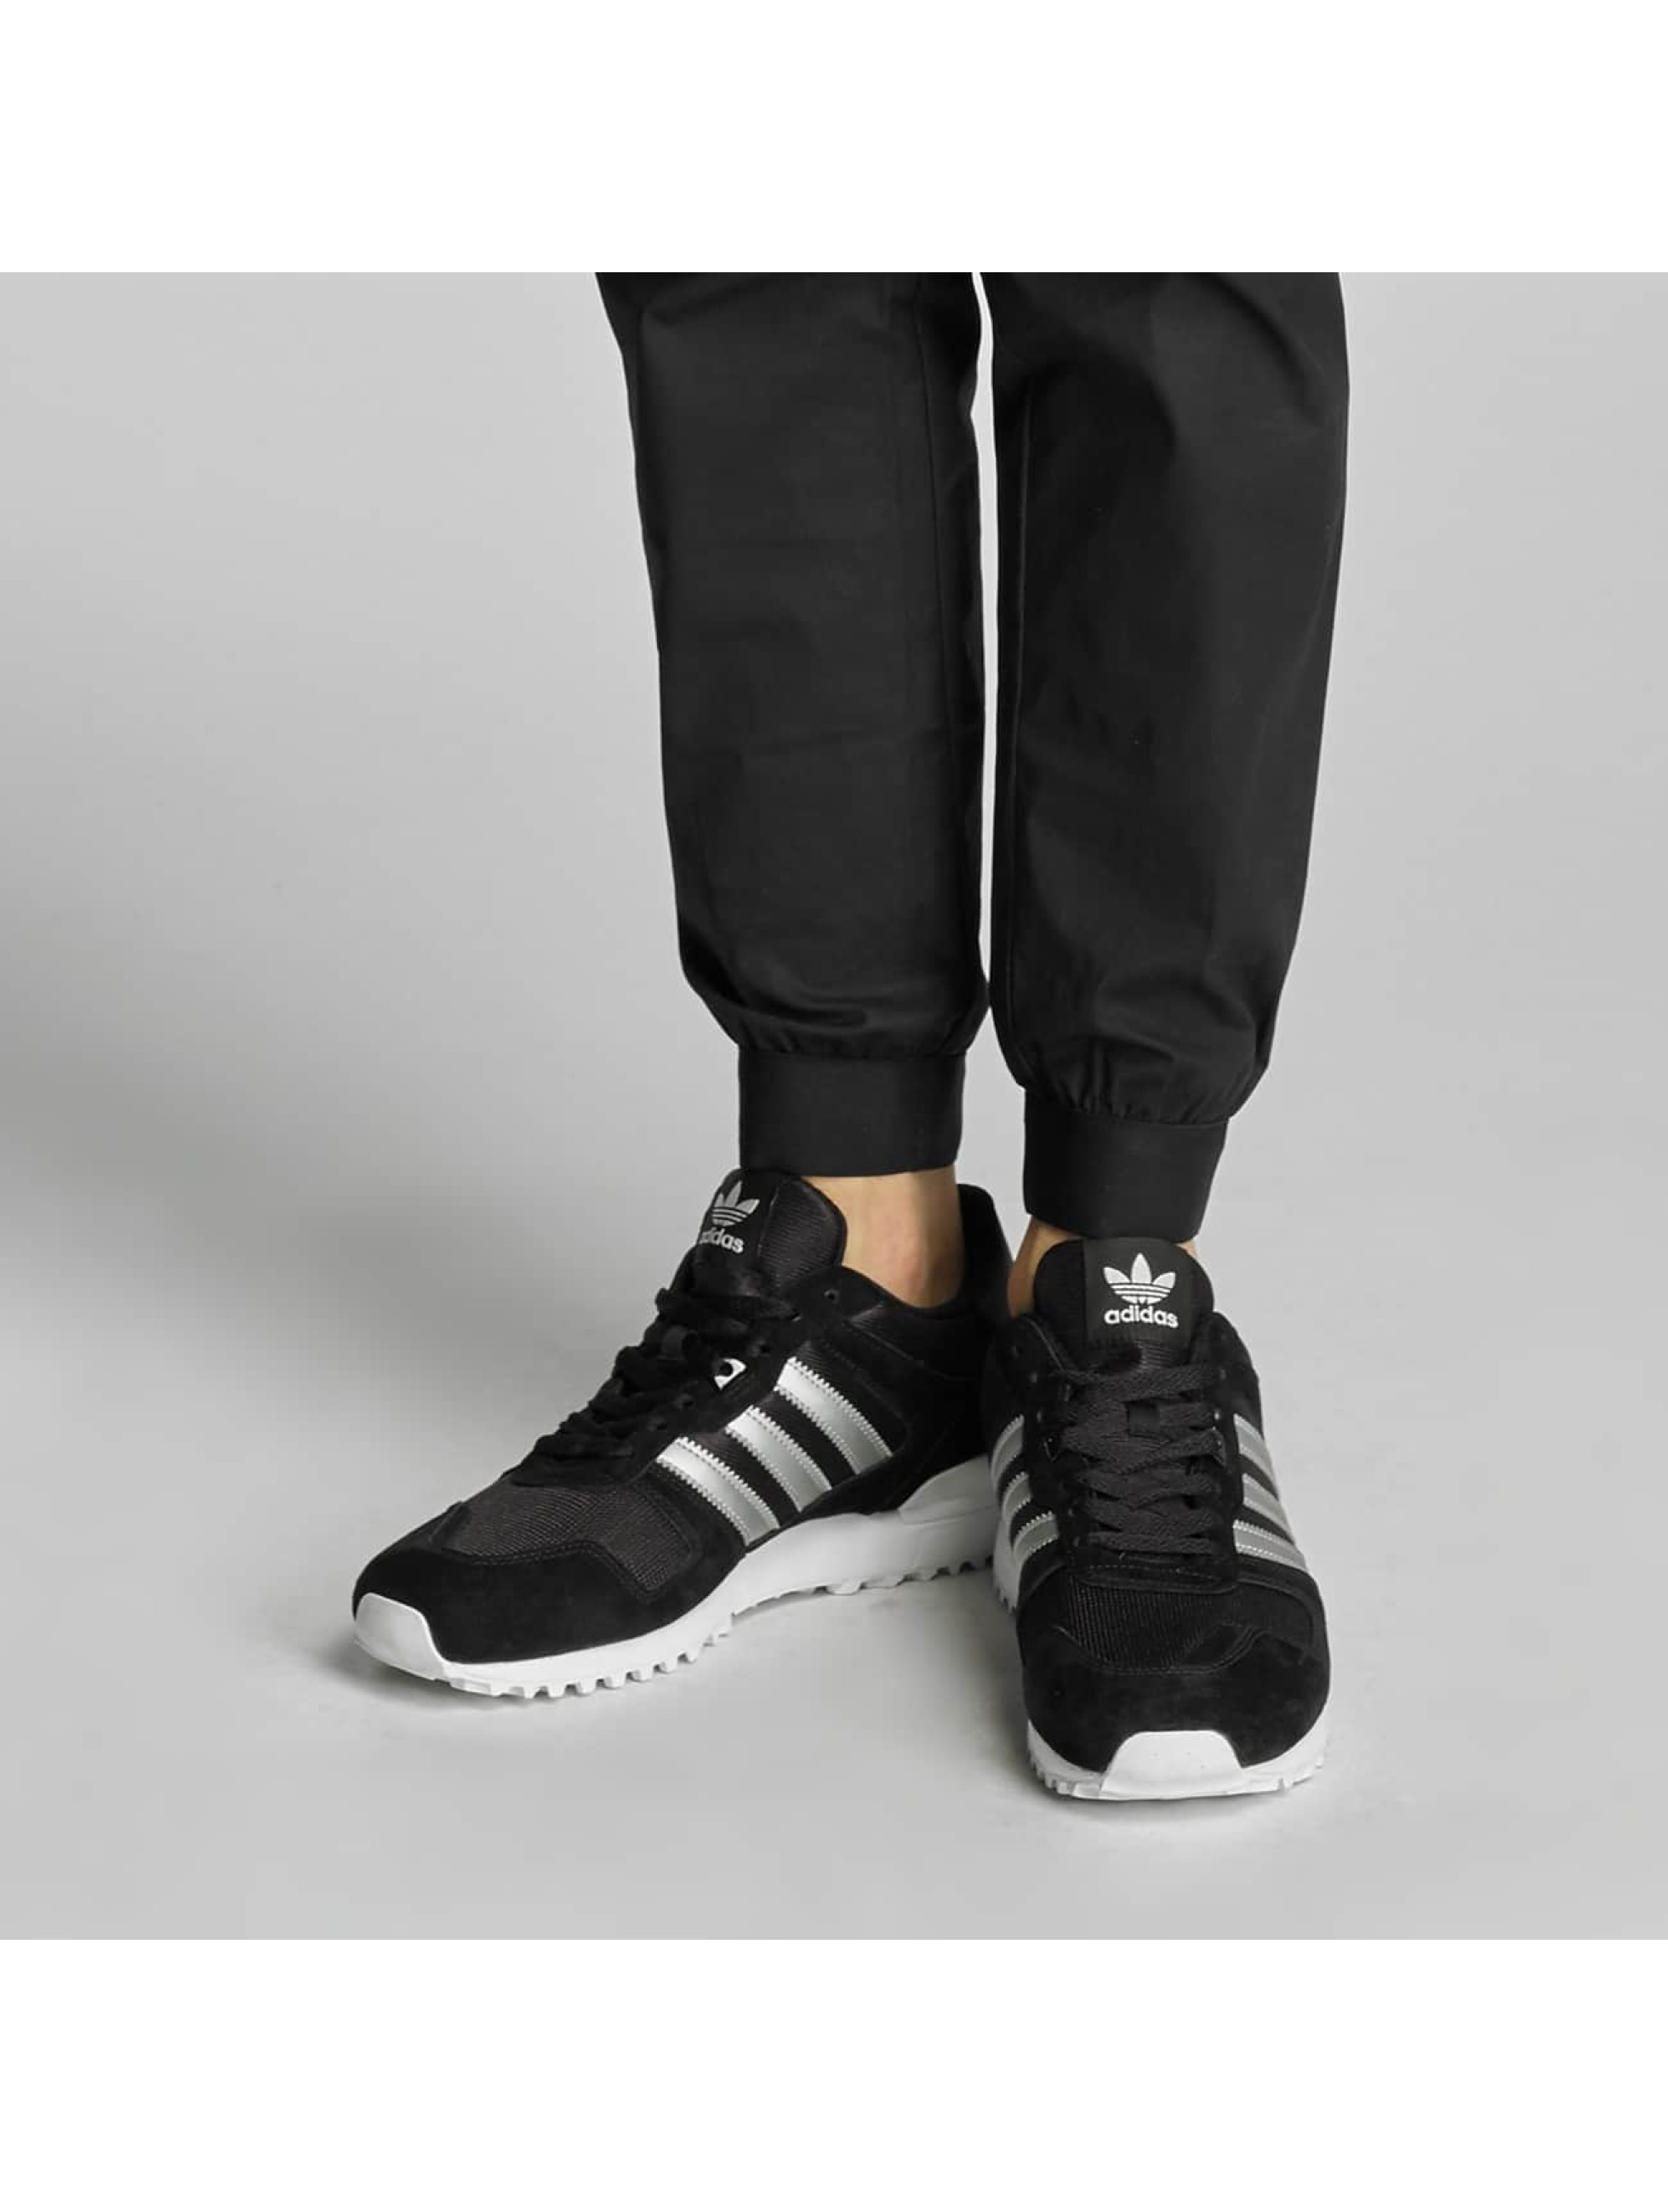 adidas schoen / sneaker ZX 700 in zwart